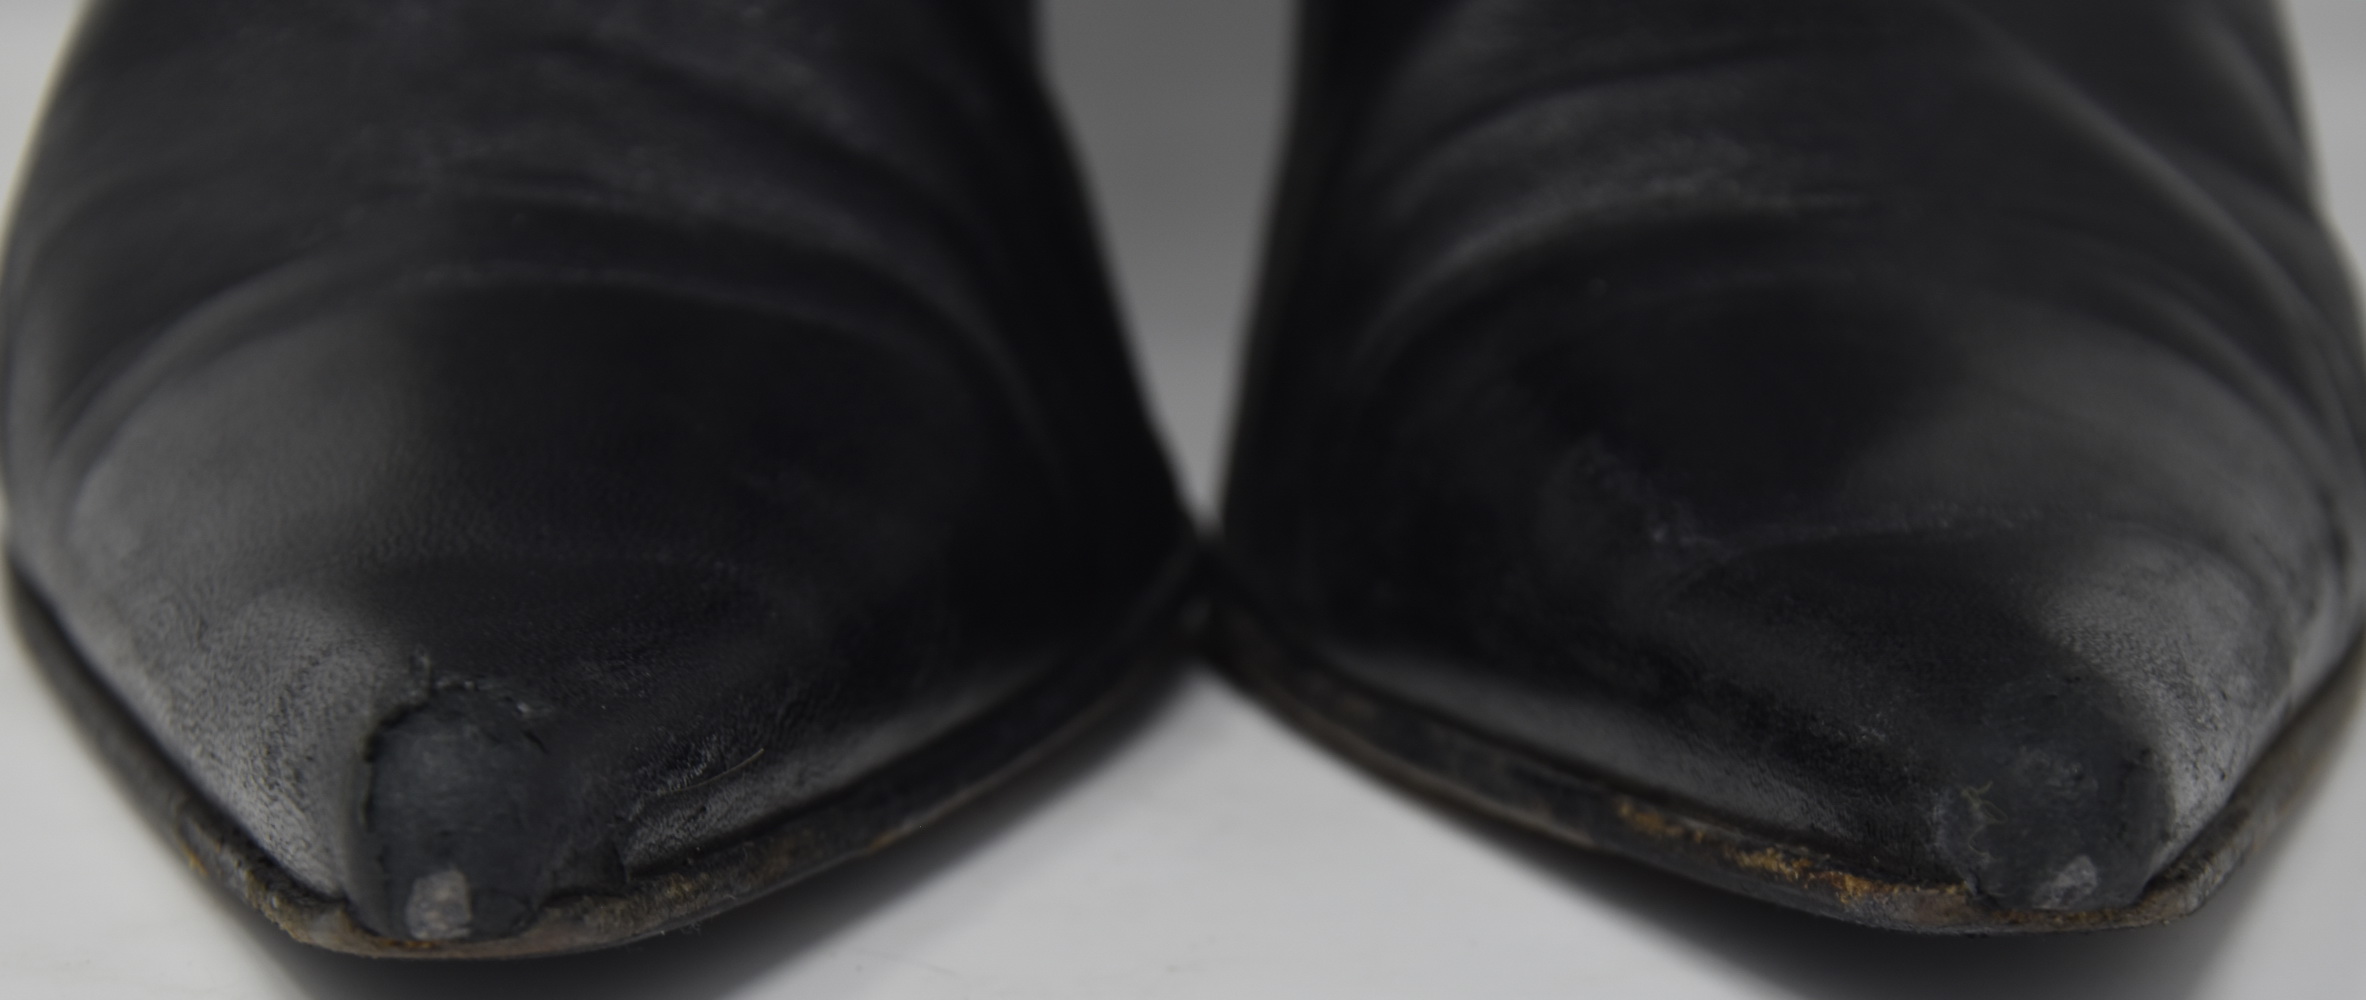 W122 luciano padovan black heel boots t.37 uk 4 € 370 value | eBay